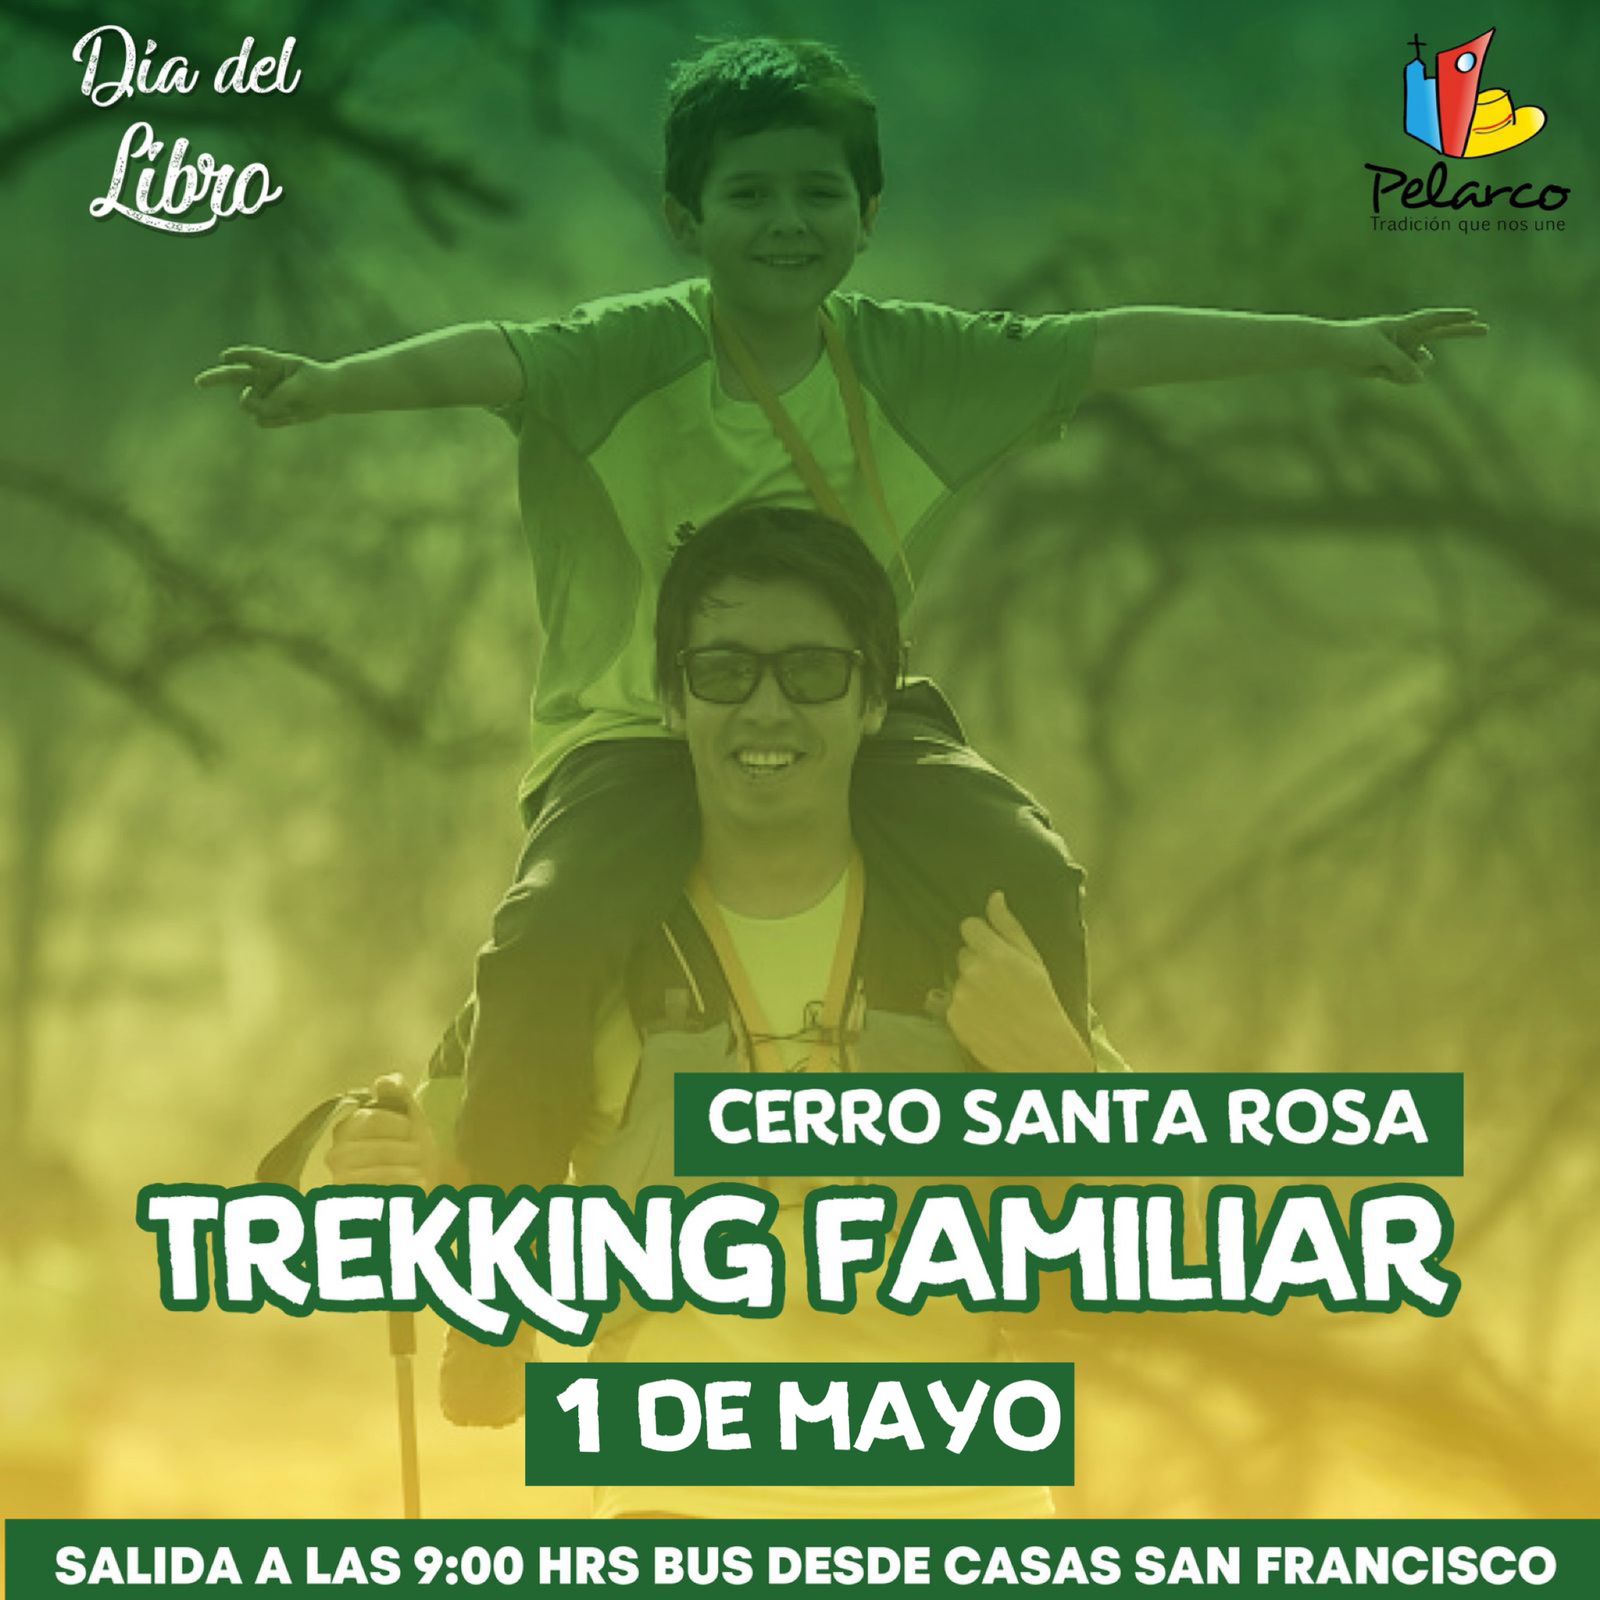 Invitan a trekking familiar en el Cerro Santa Rosa 